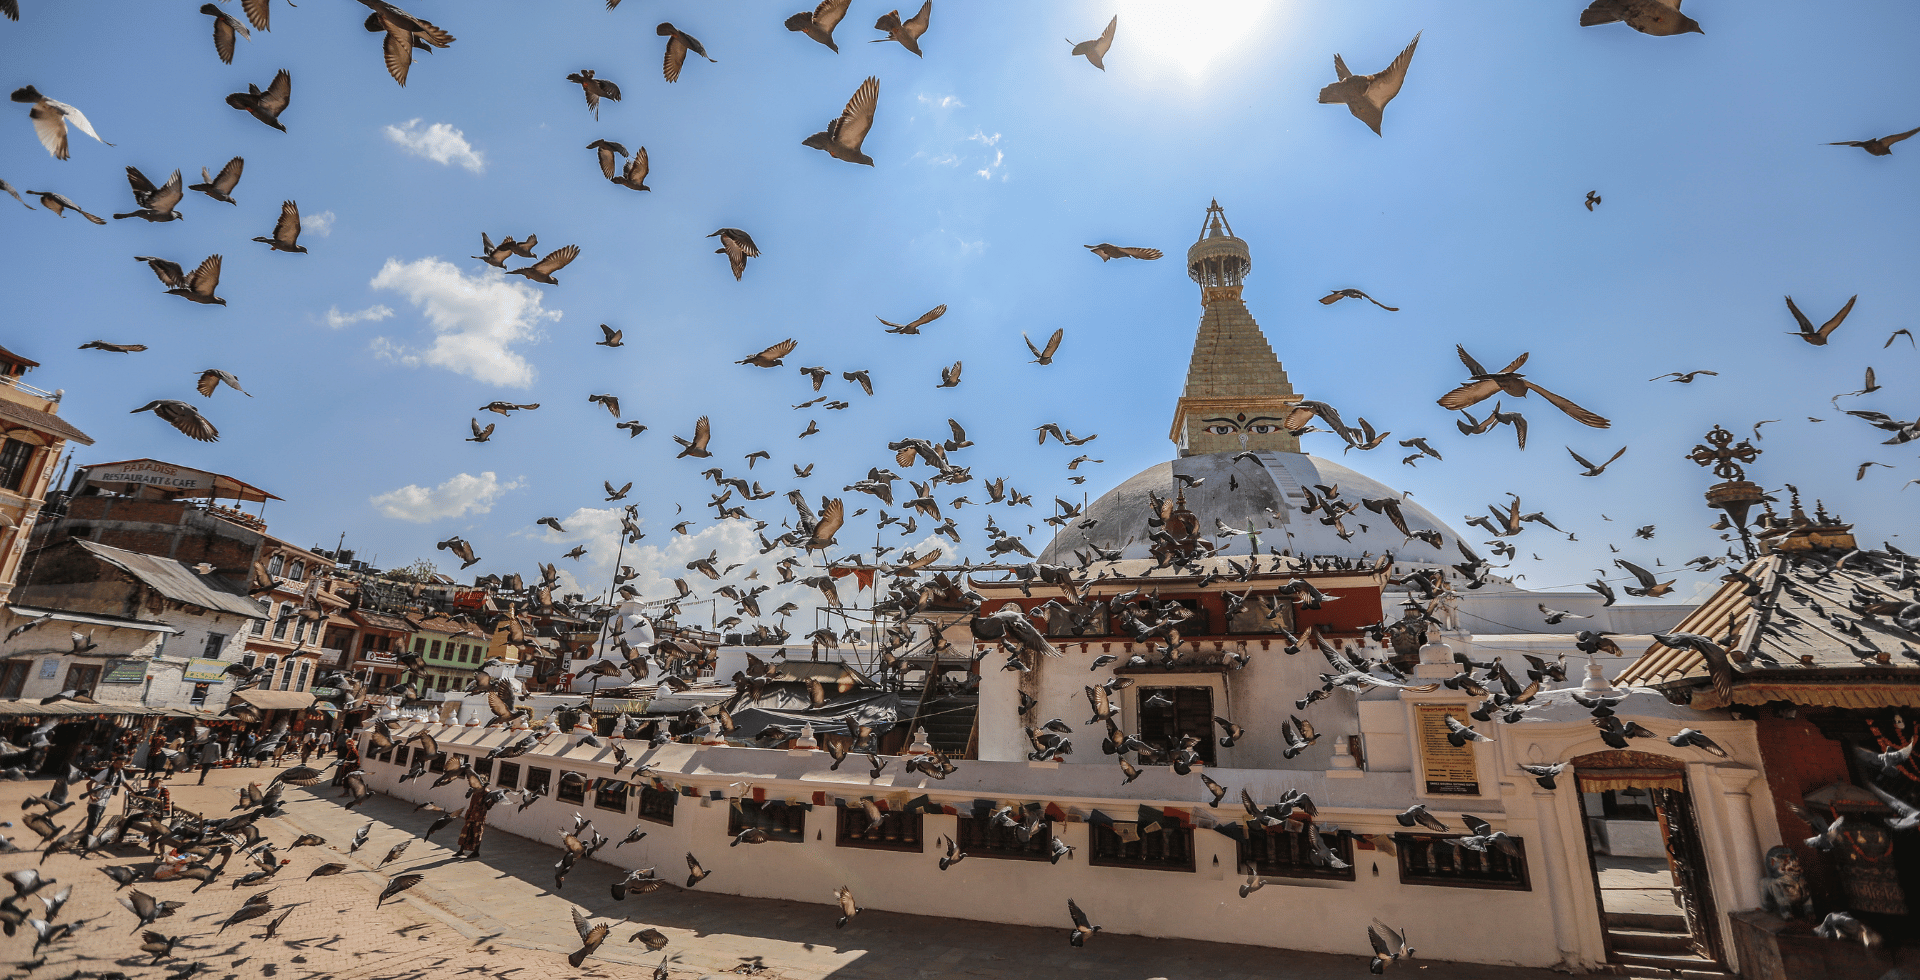 boudhanath stupa with many pigeons flying around it